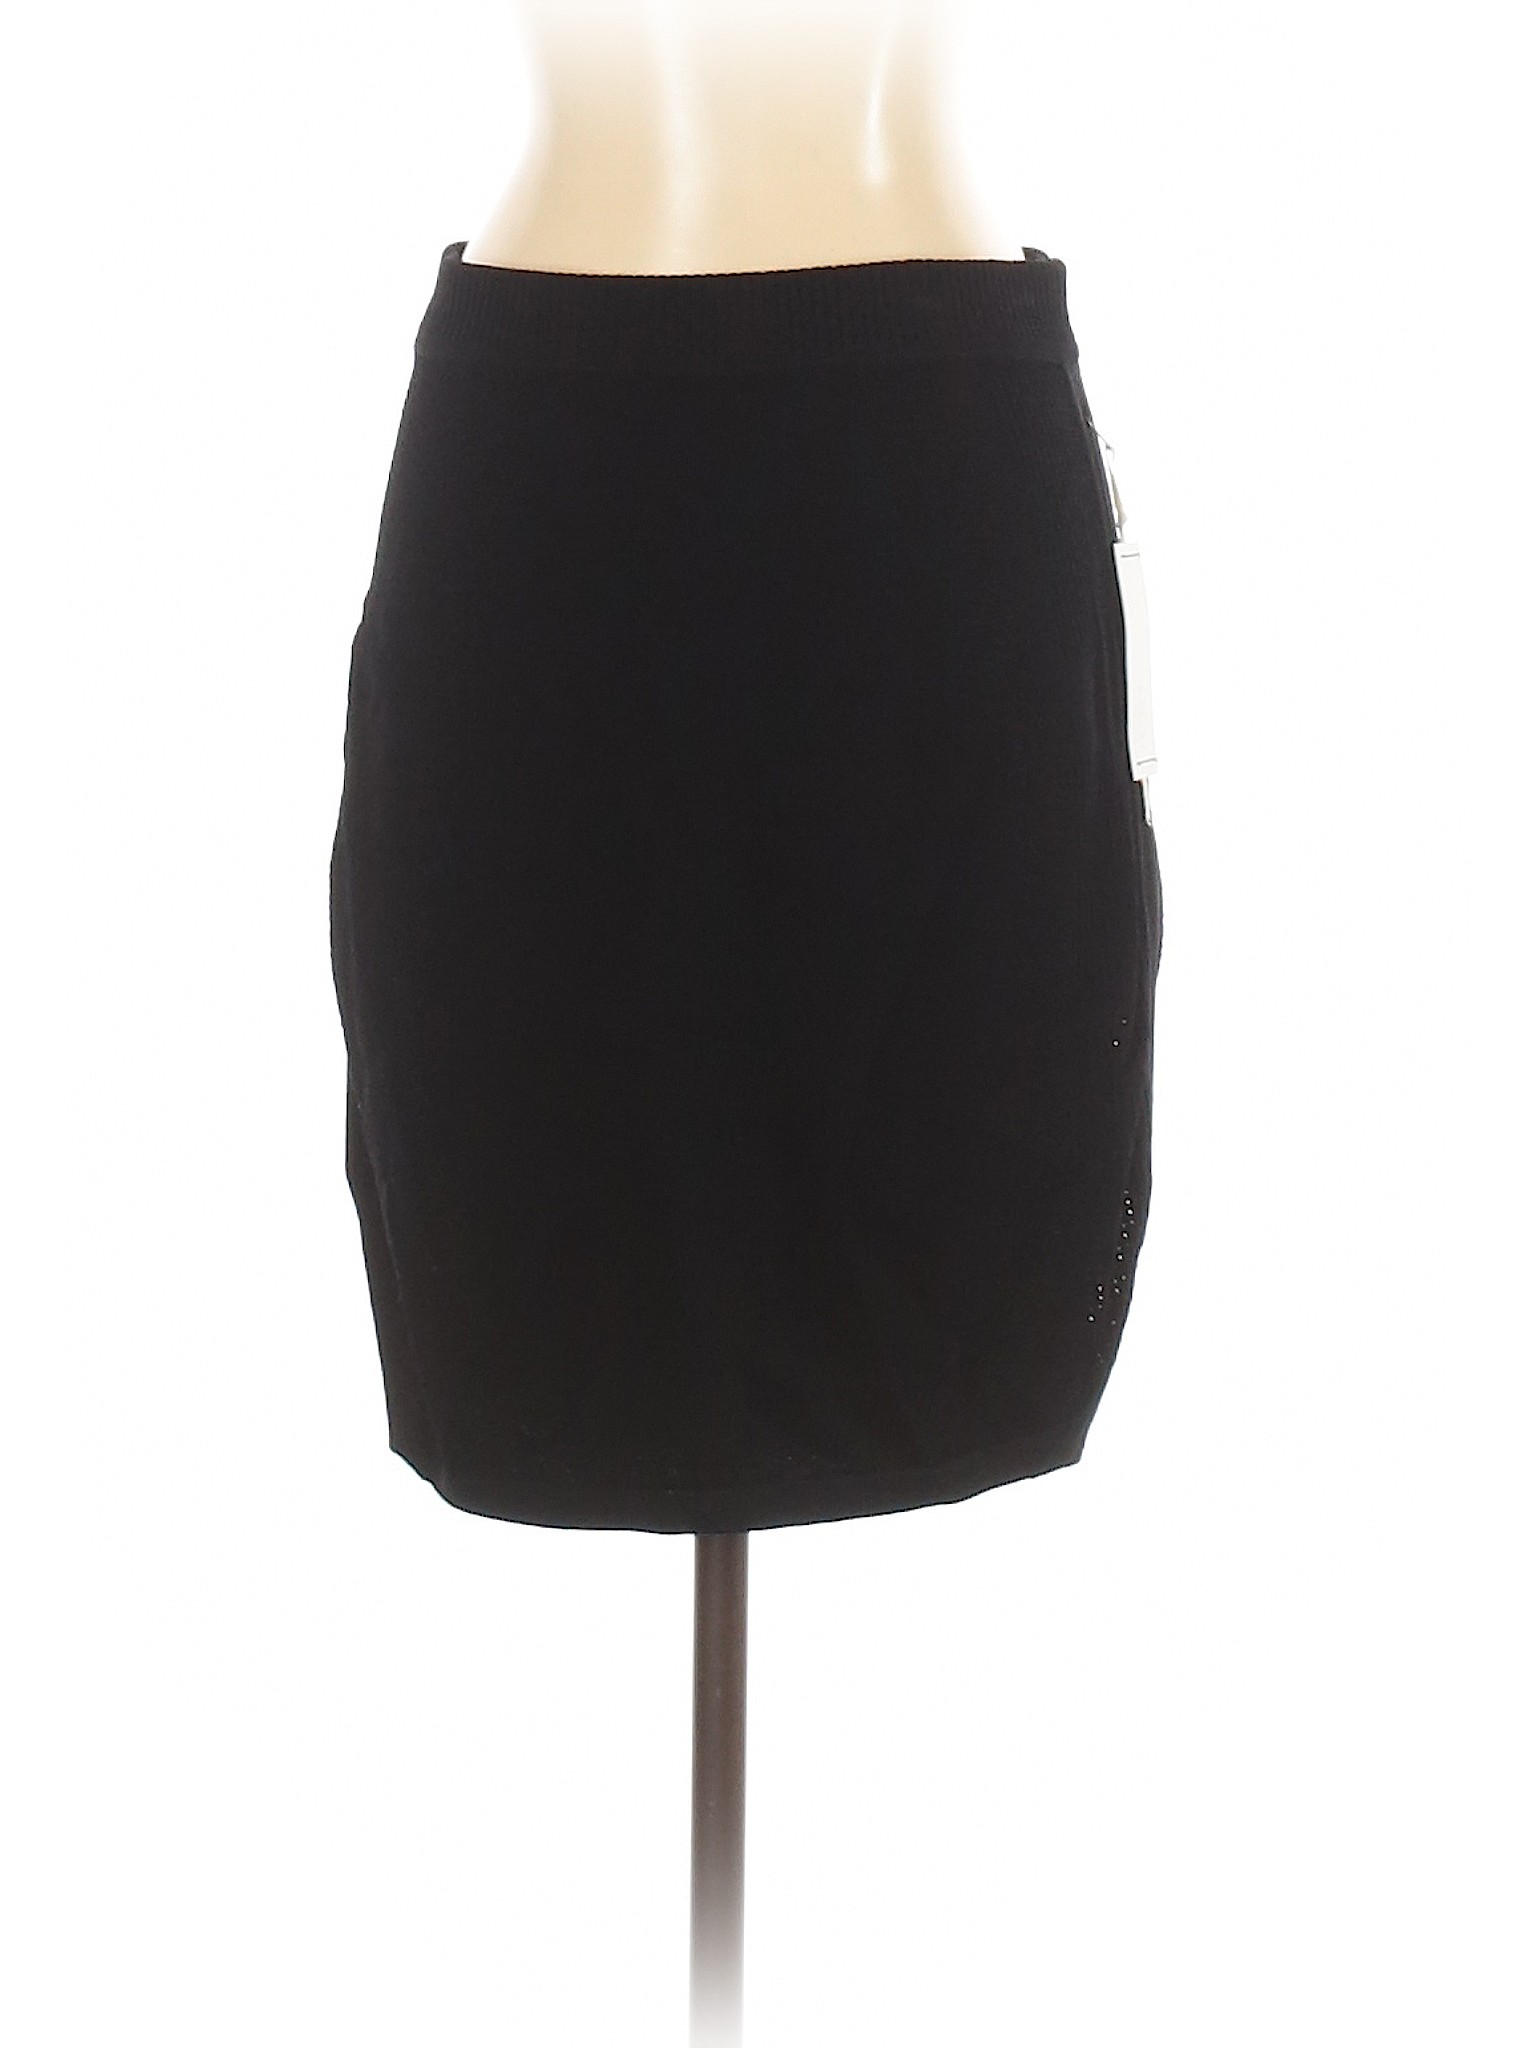 NWT J Brand Women Black Casual Skirt S | eBay